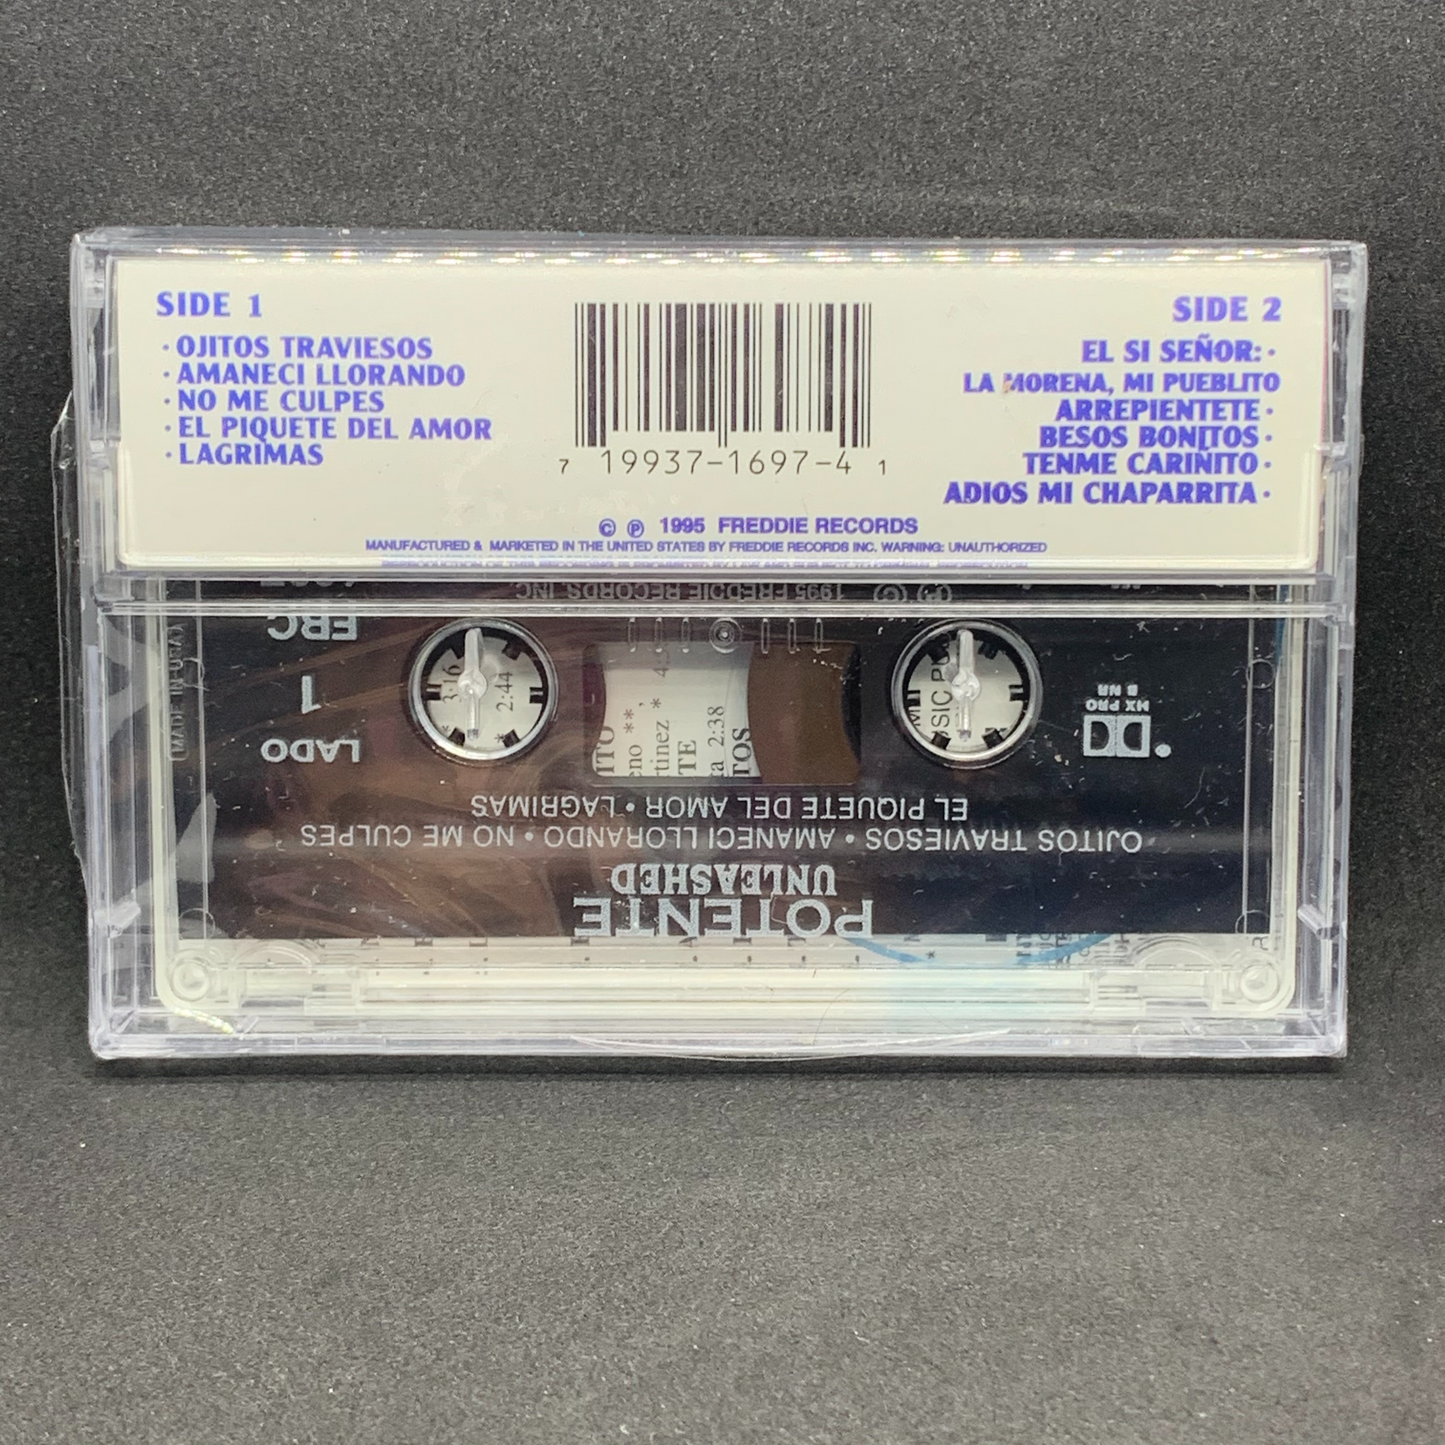 Potente - Unleashed (Cassette)